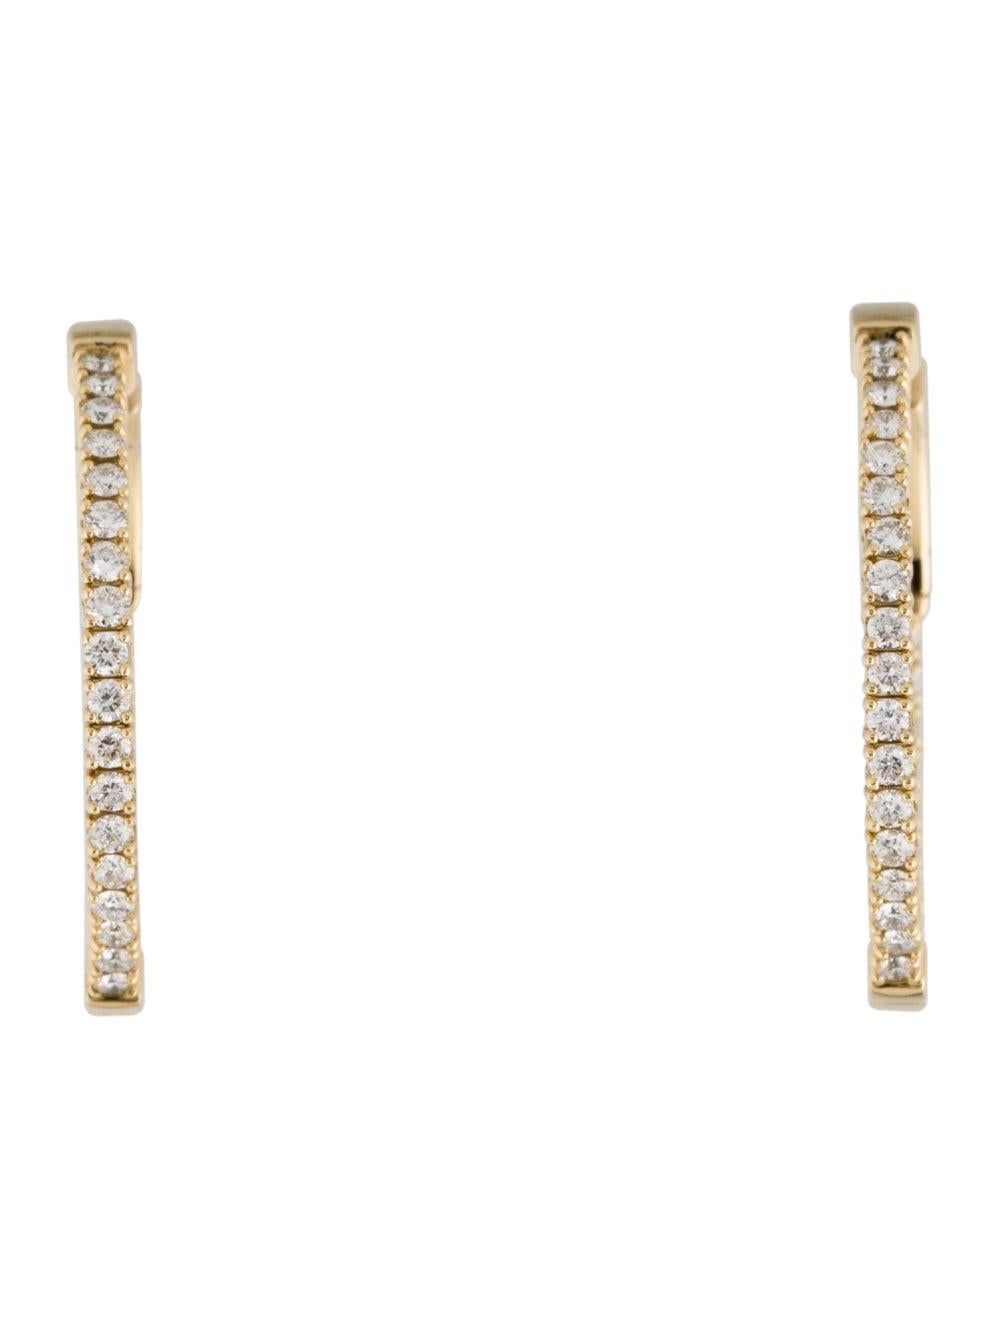 Contemporary 14 Karat Yellow Gold 1.09 Carat Diamond Flexible Hoop Earrings For Sale